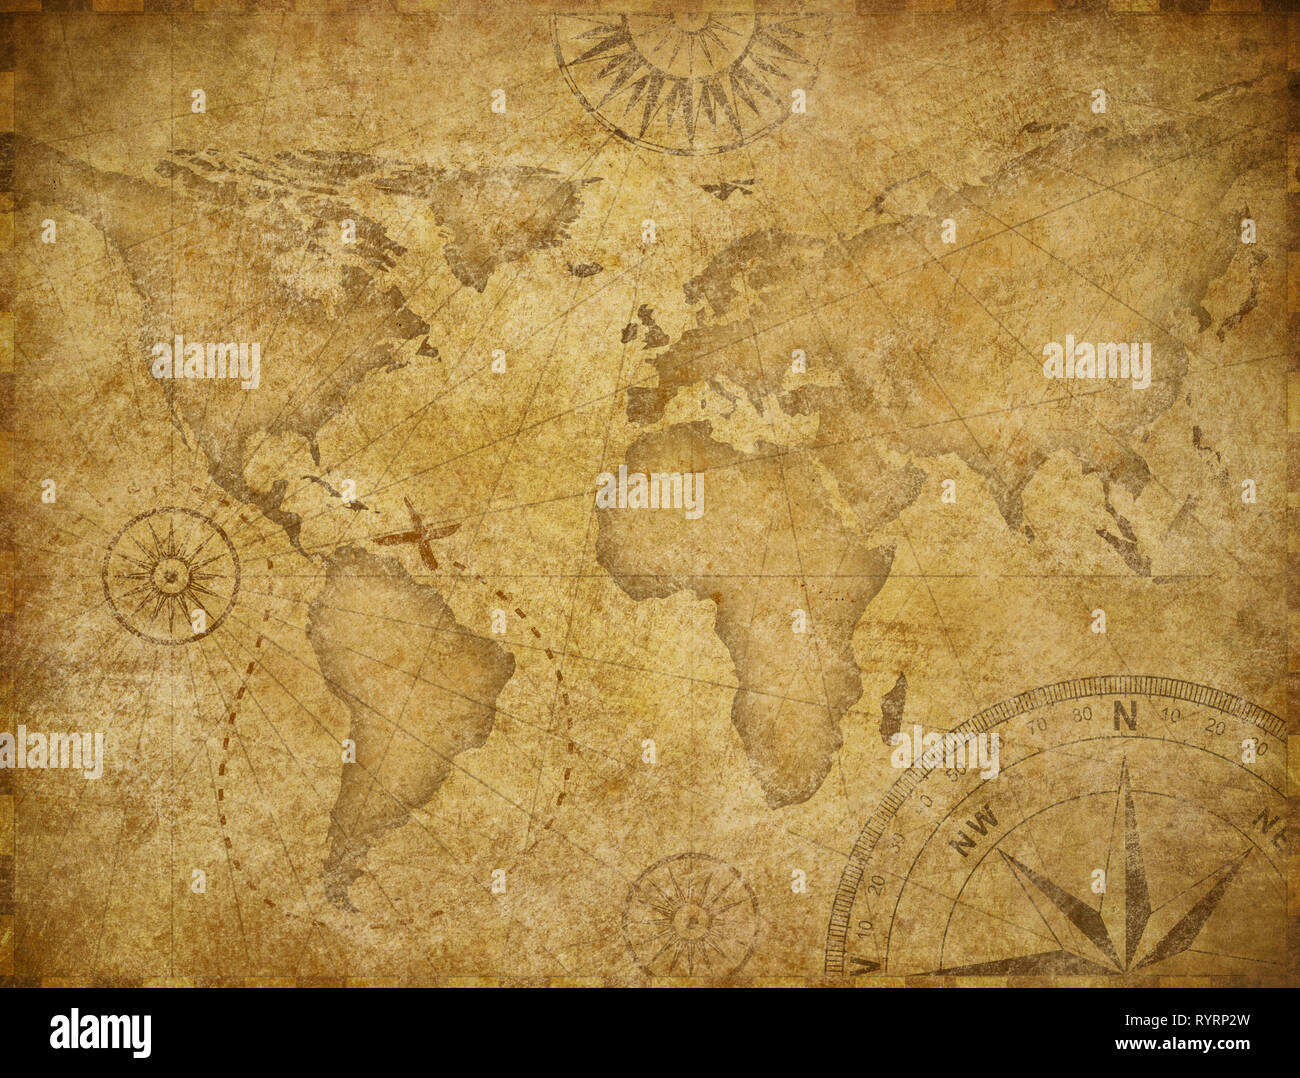 Old world exploration map based on image furnished by NASA Stock Photo